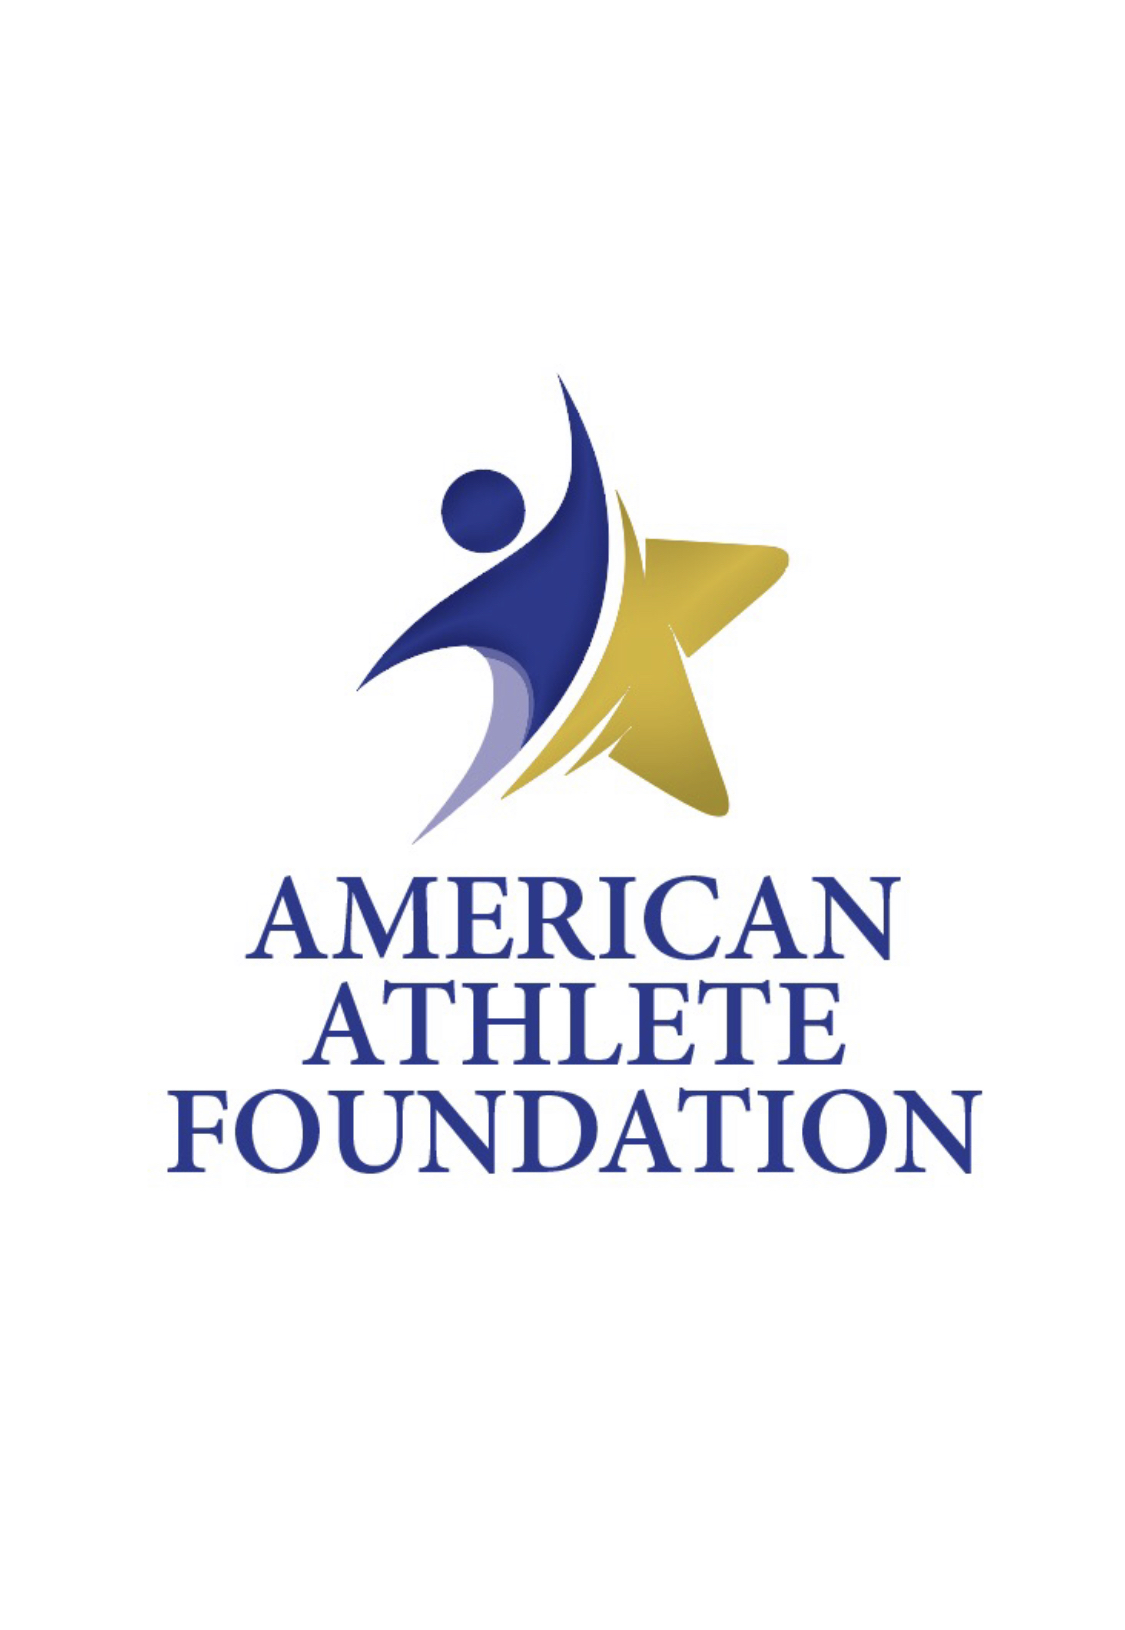 American Athlete Foundation Inc.